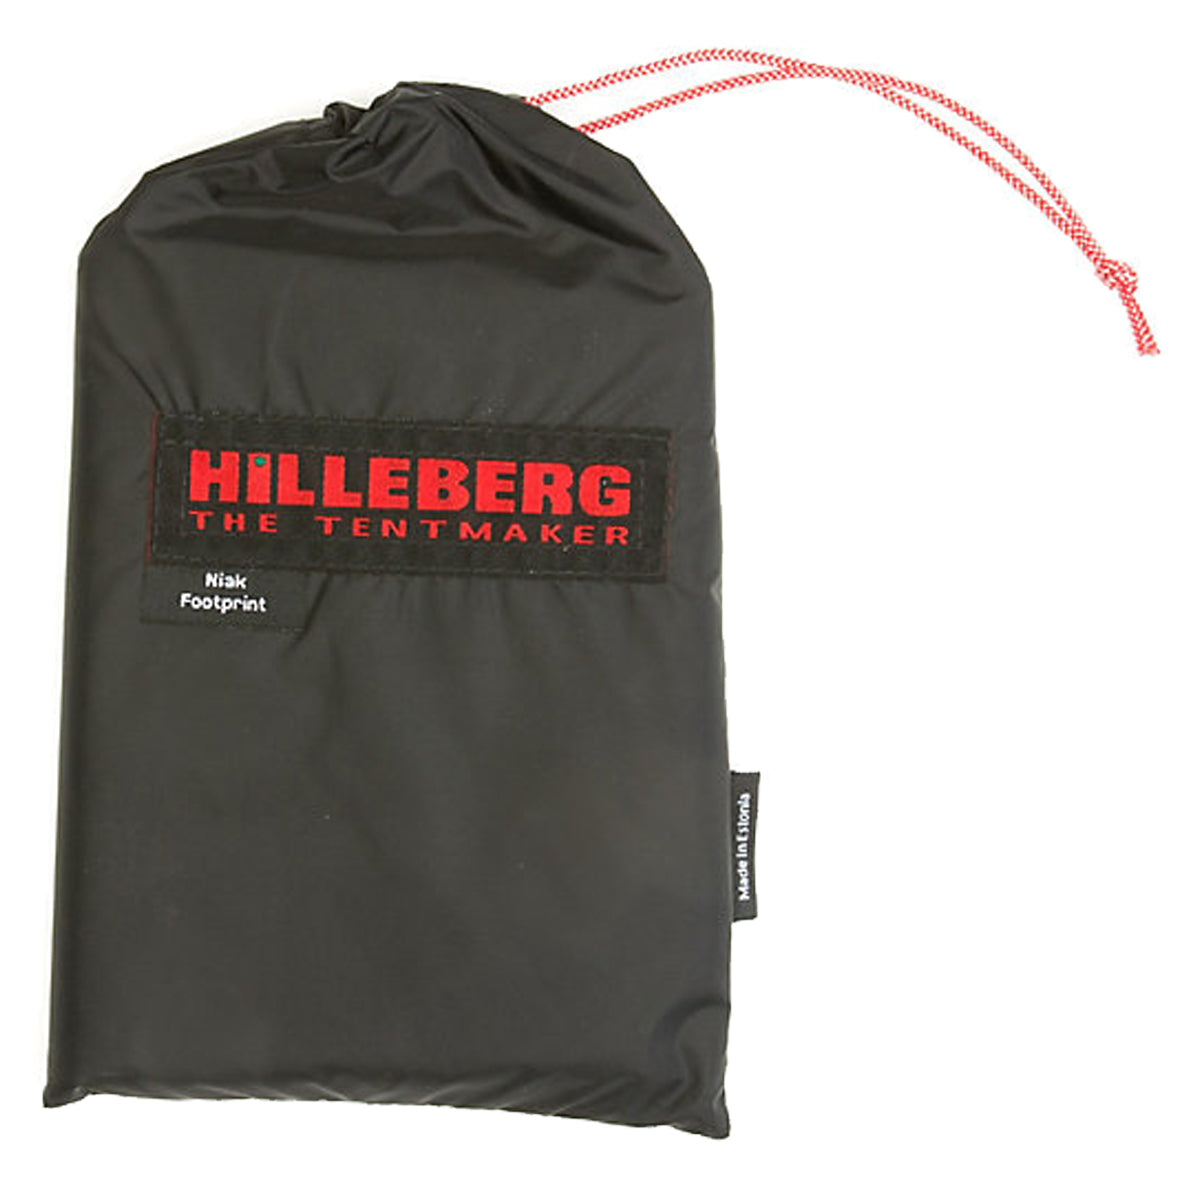 Hilleberg Niak 2 Footprint in  by GOHUNT | Hilleberg - GOHUNT Shop